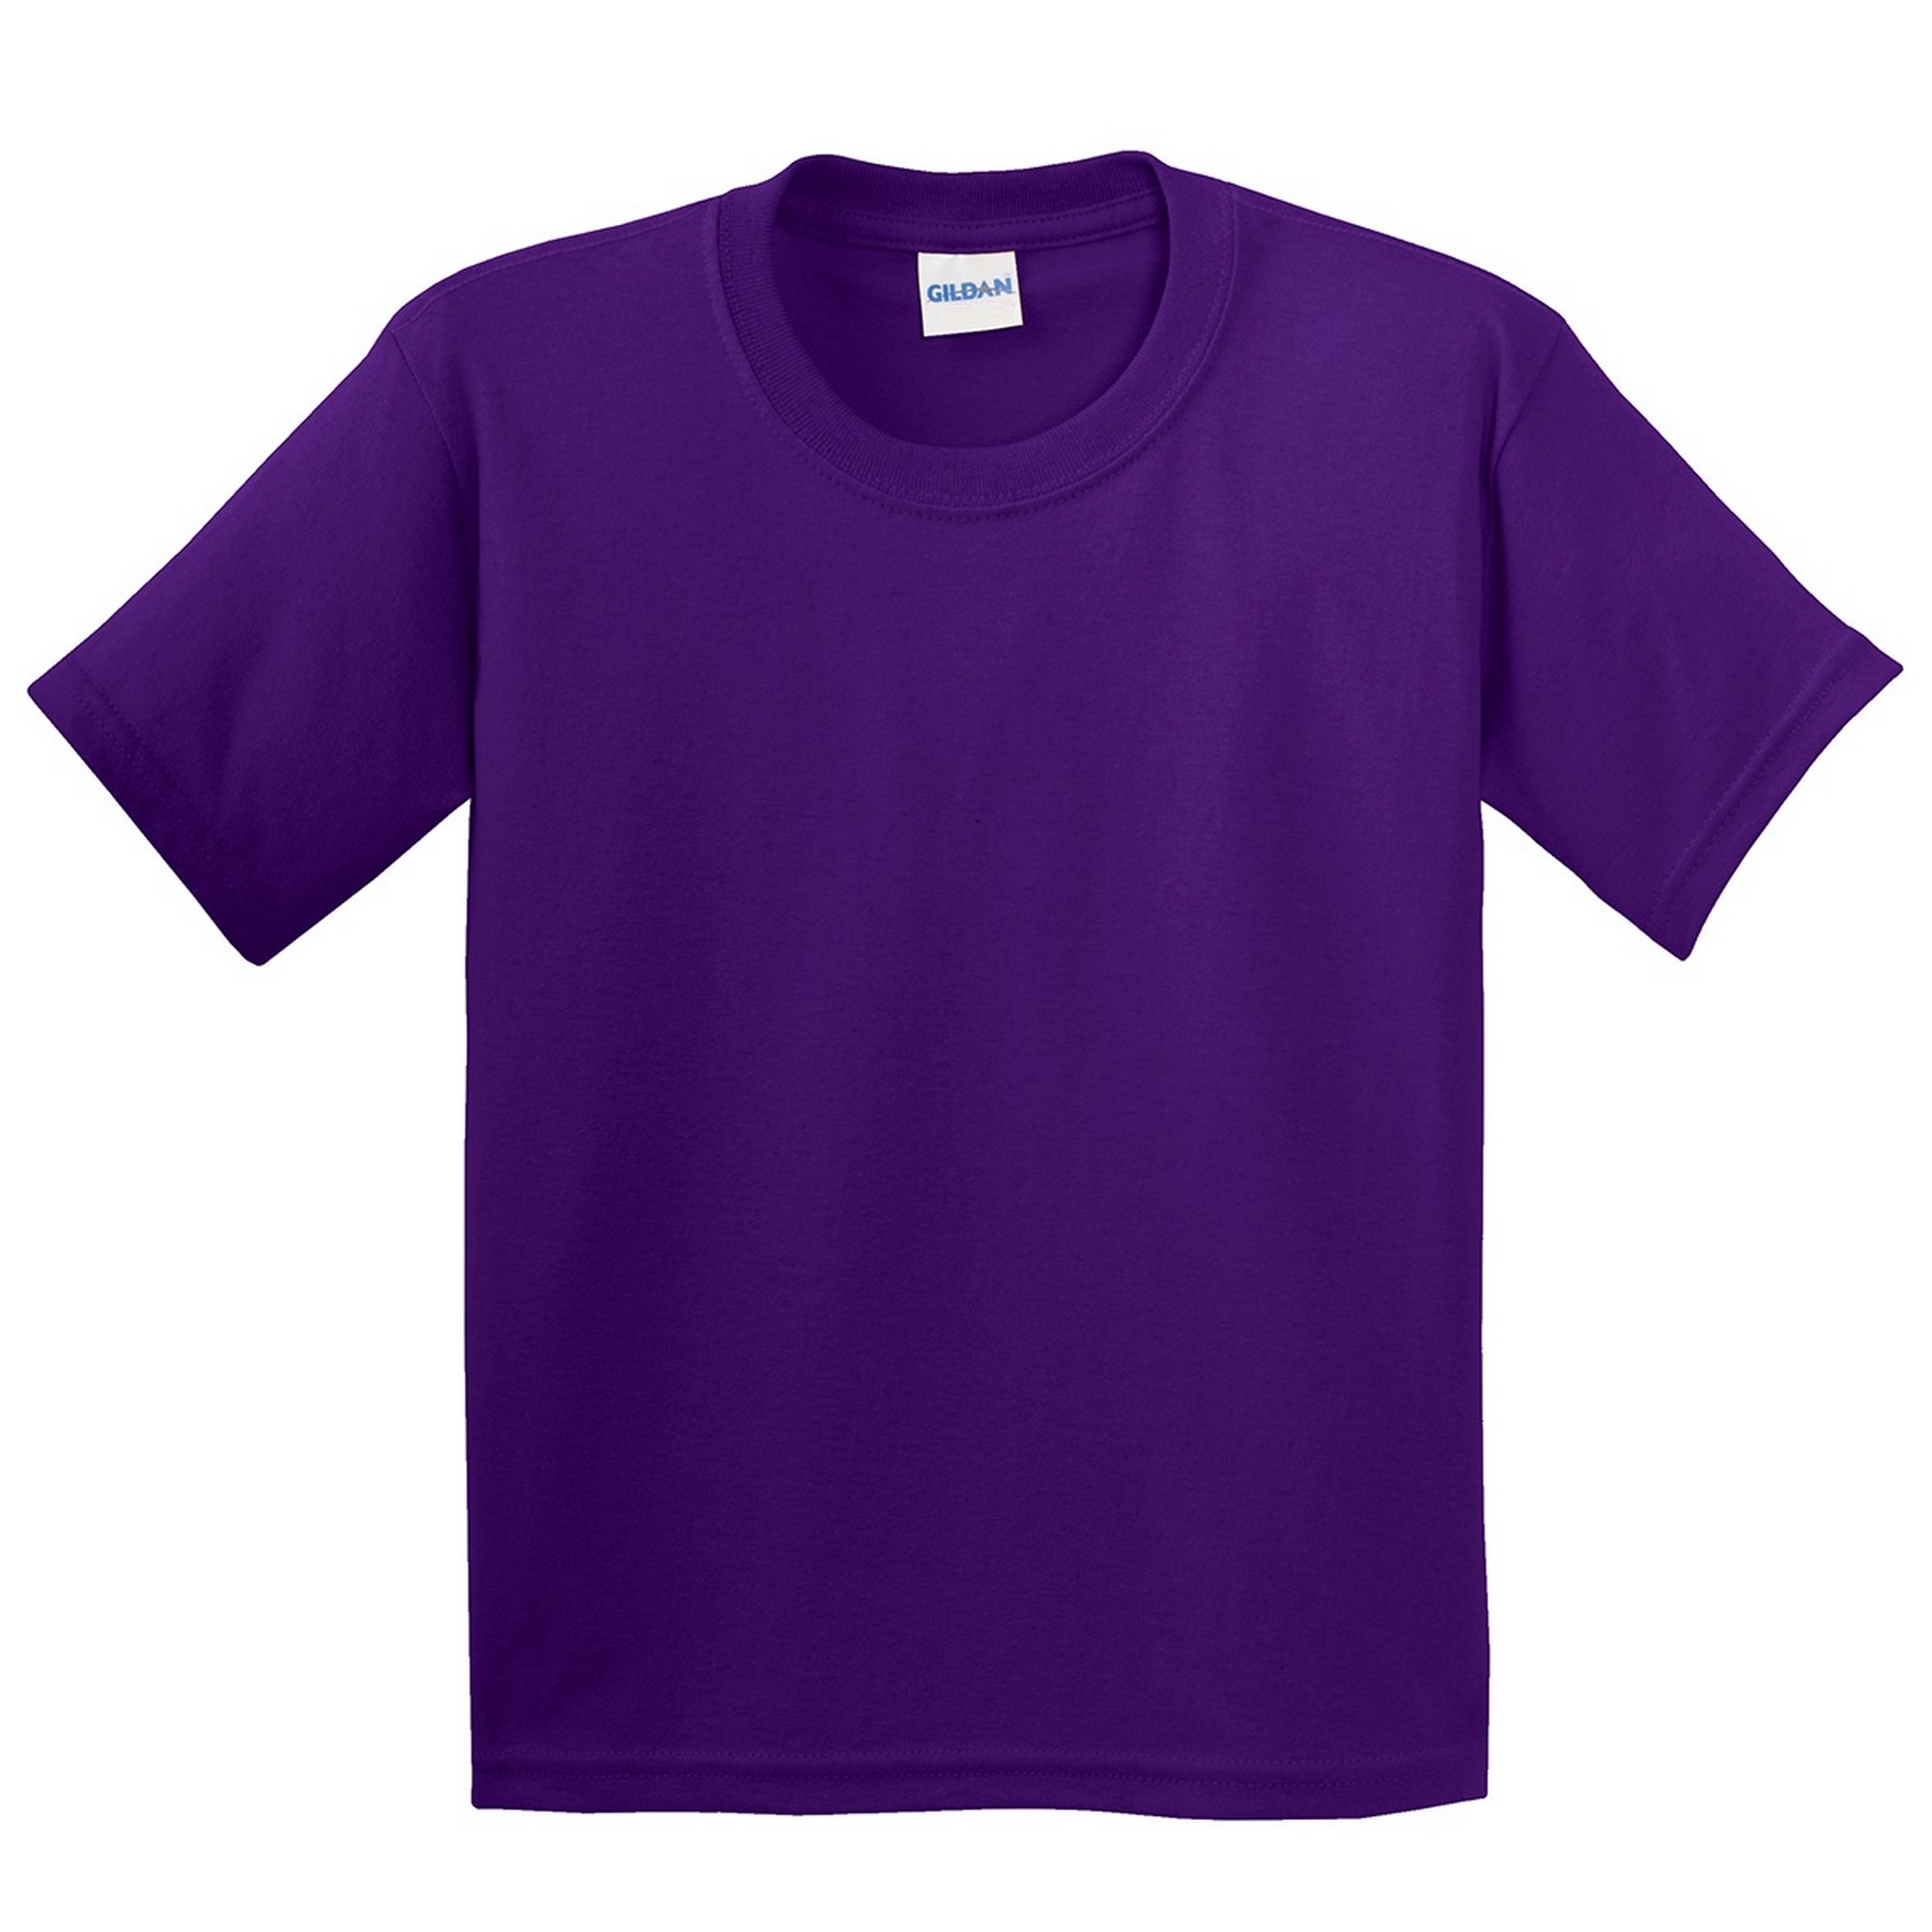 T-shirt Gildan - morado - 